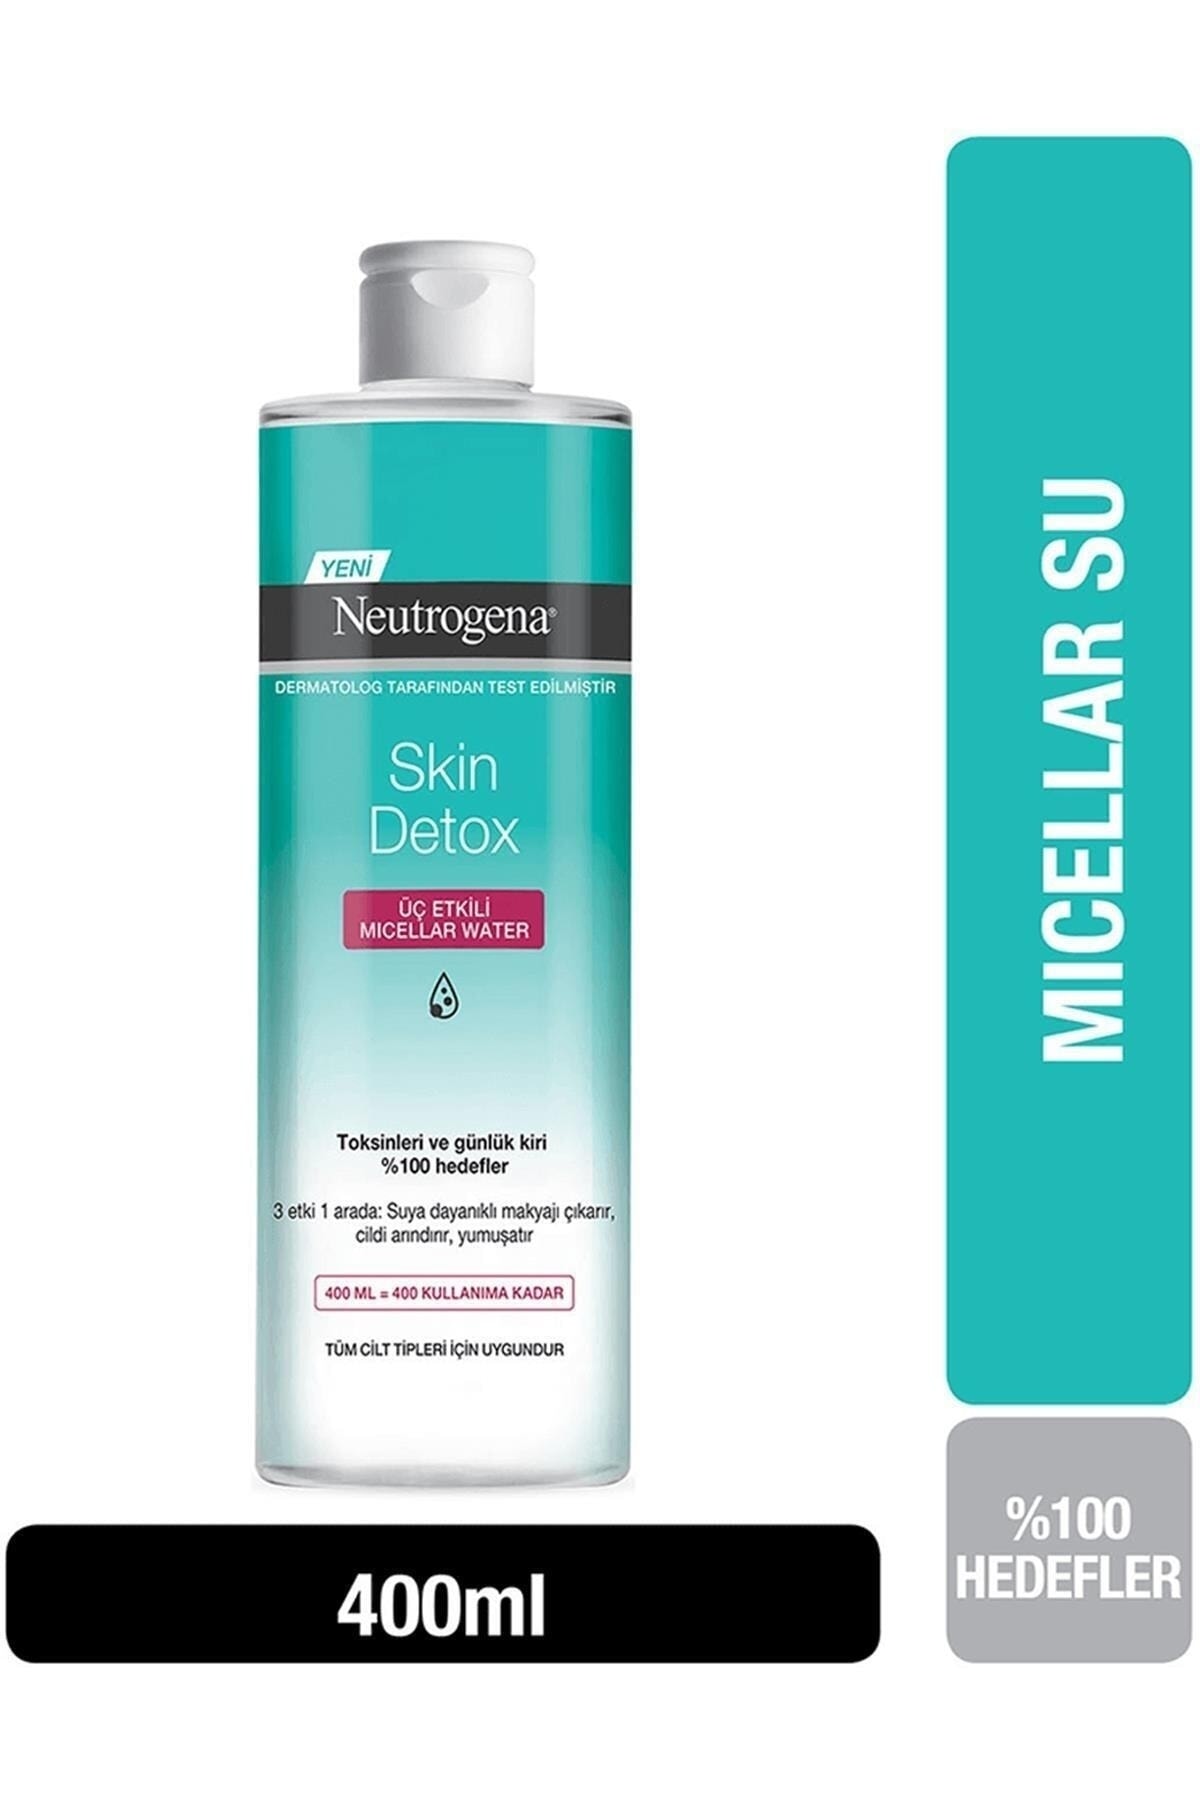 Neutrogena Orjinals Skin Detox 3 Etkili Micellar Water 400 Ml